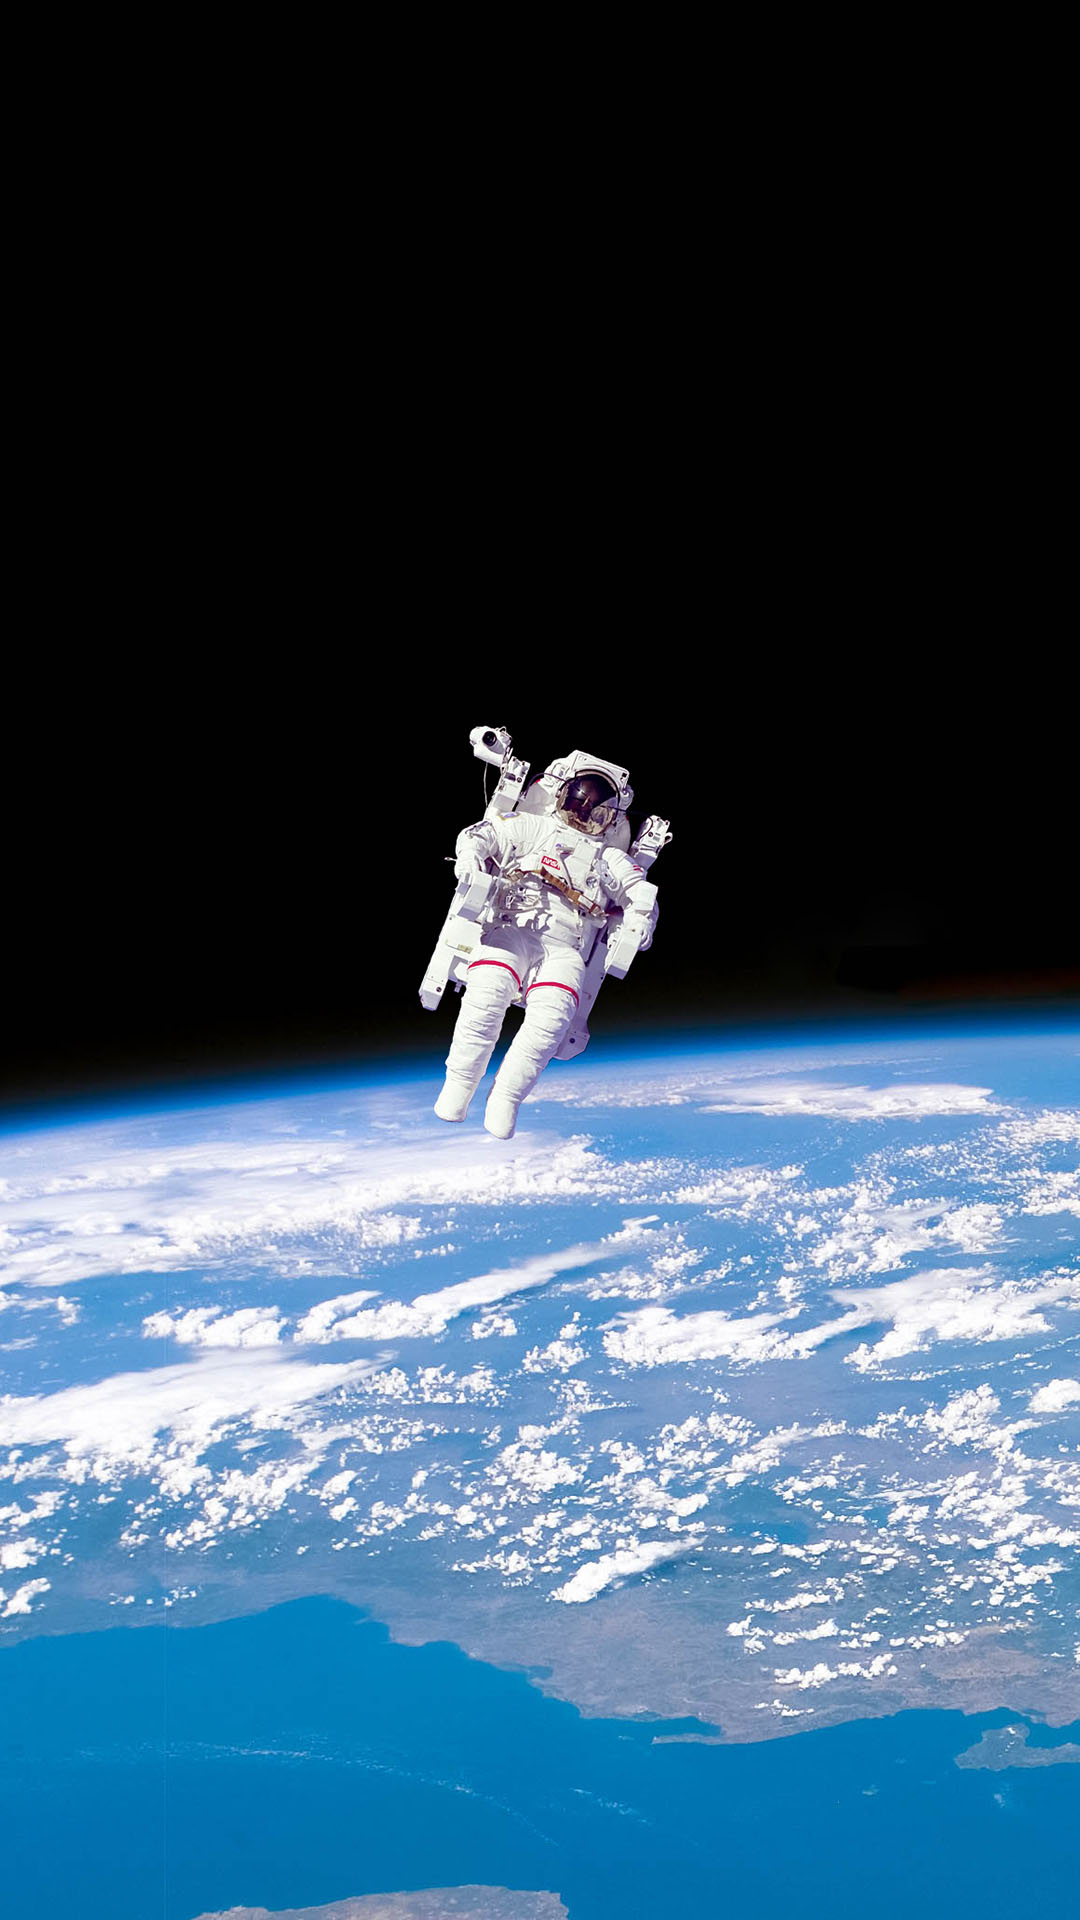 Balloonlooking planets and astronaut 2K wallpaper download